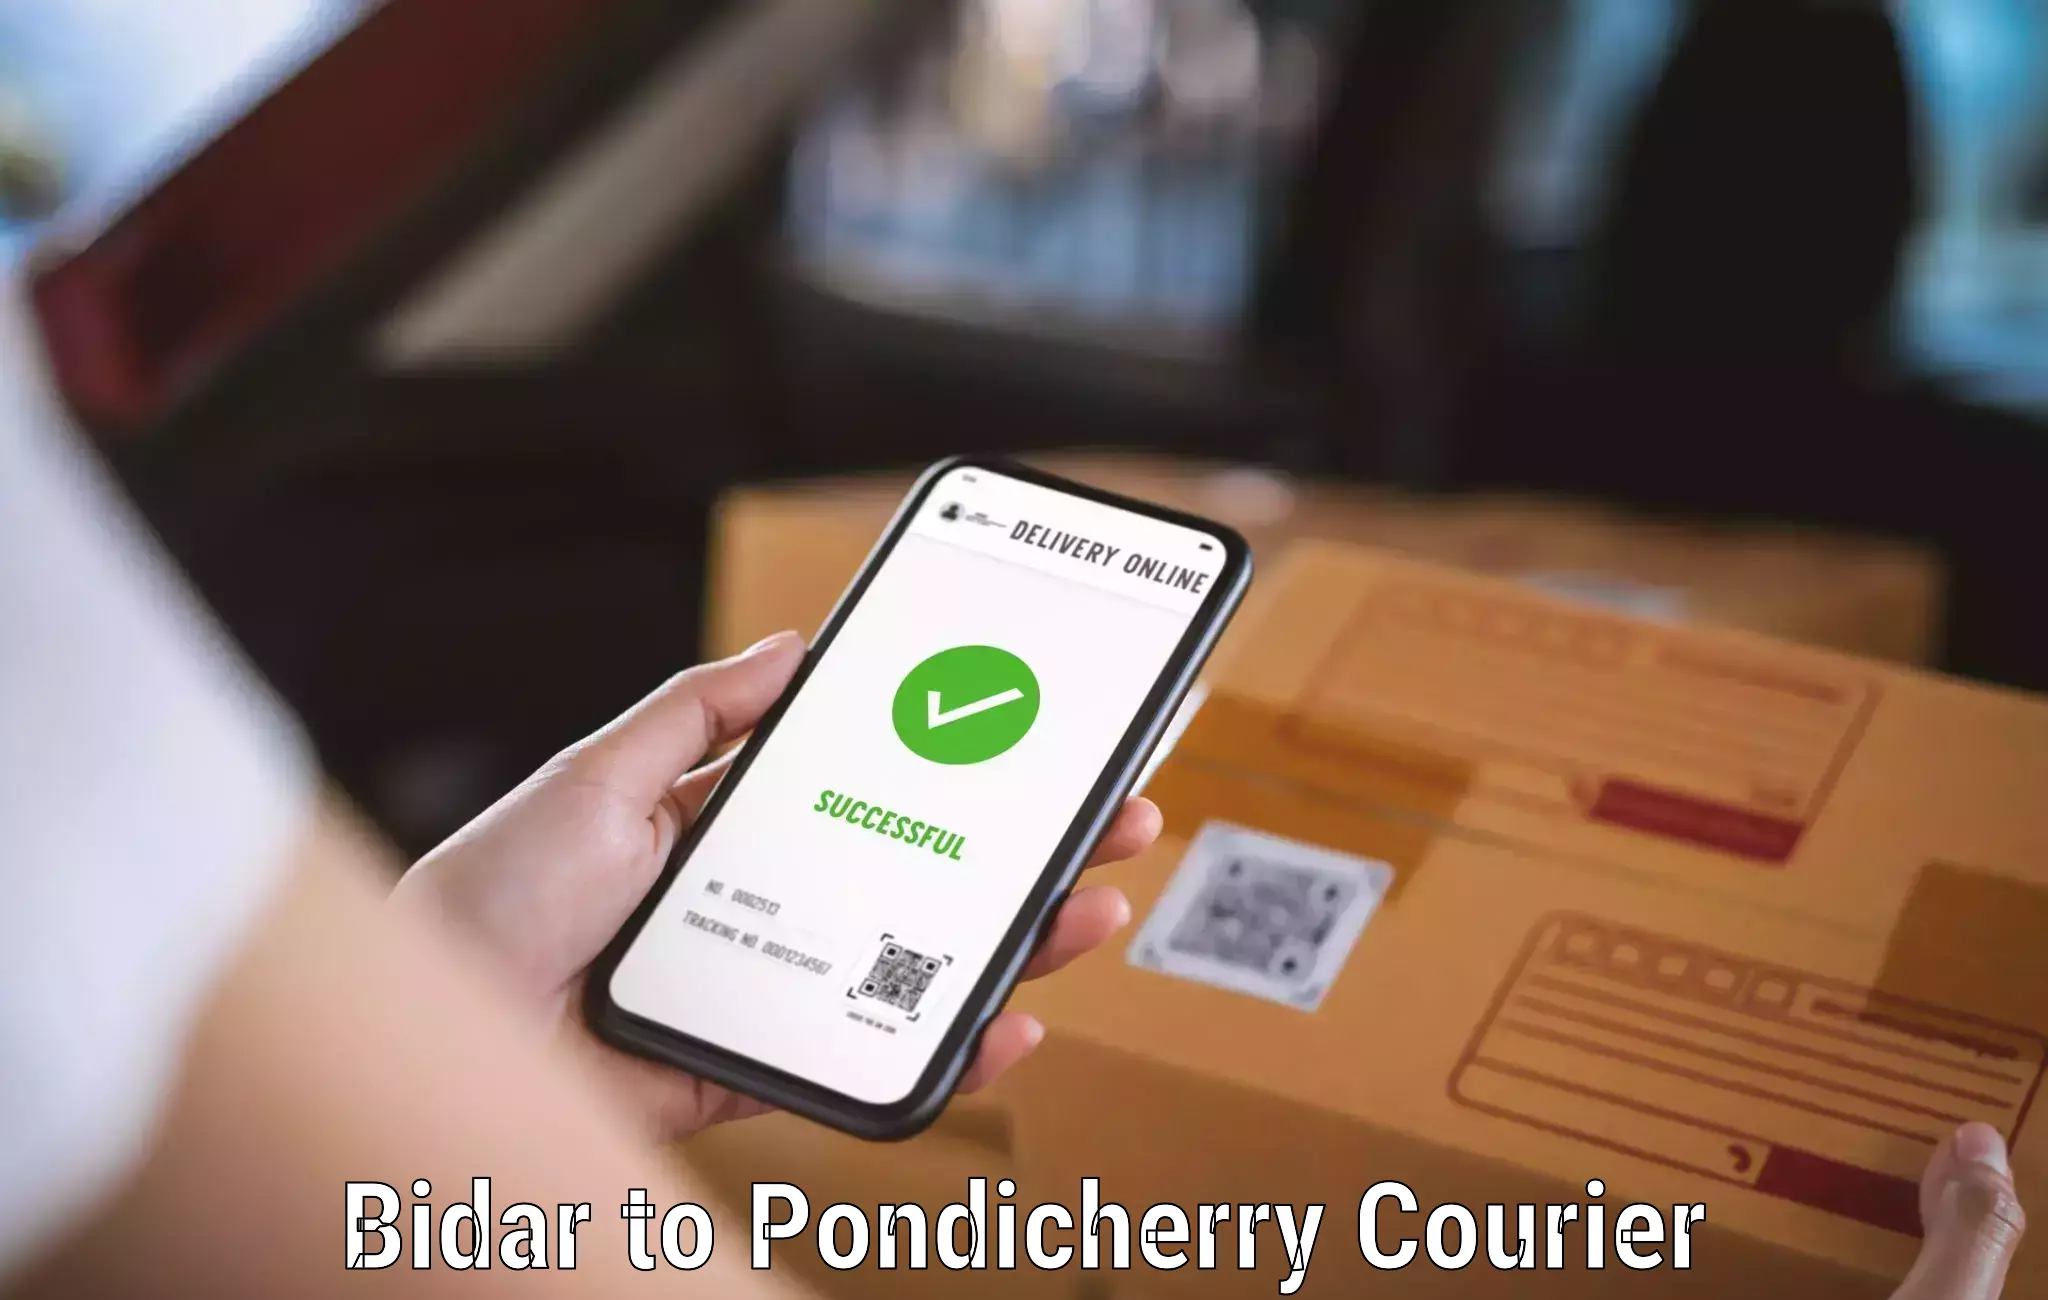 Courier app Bidar to Pondicherry University